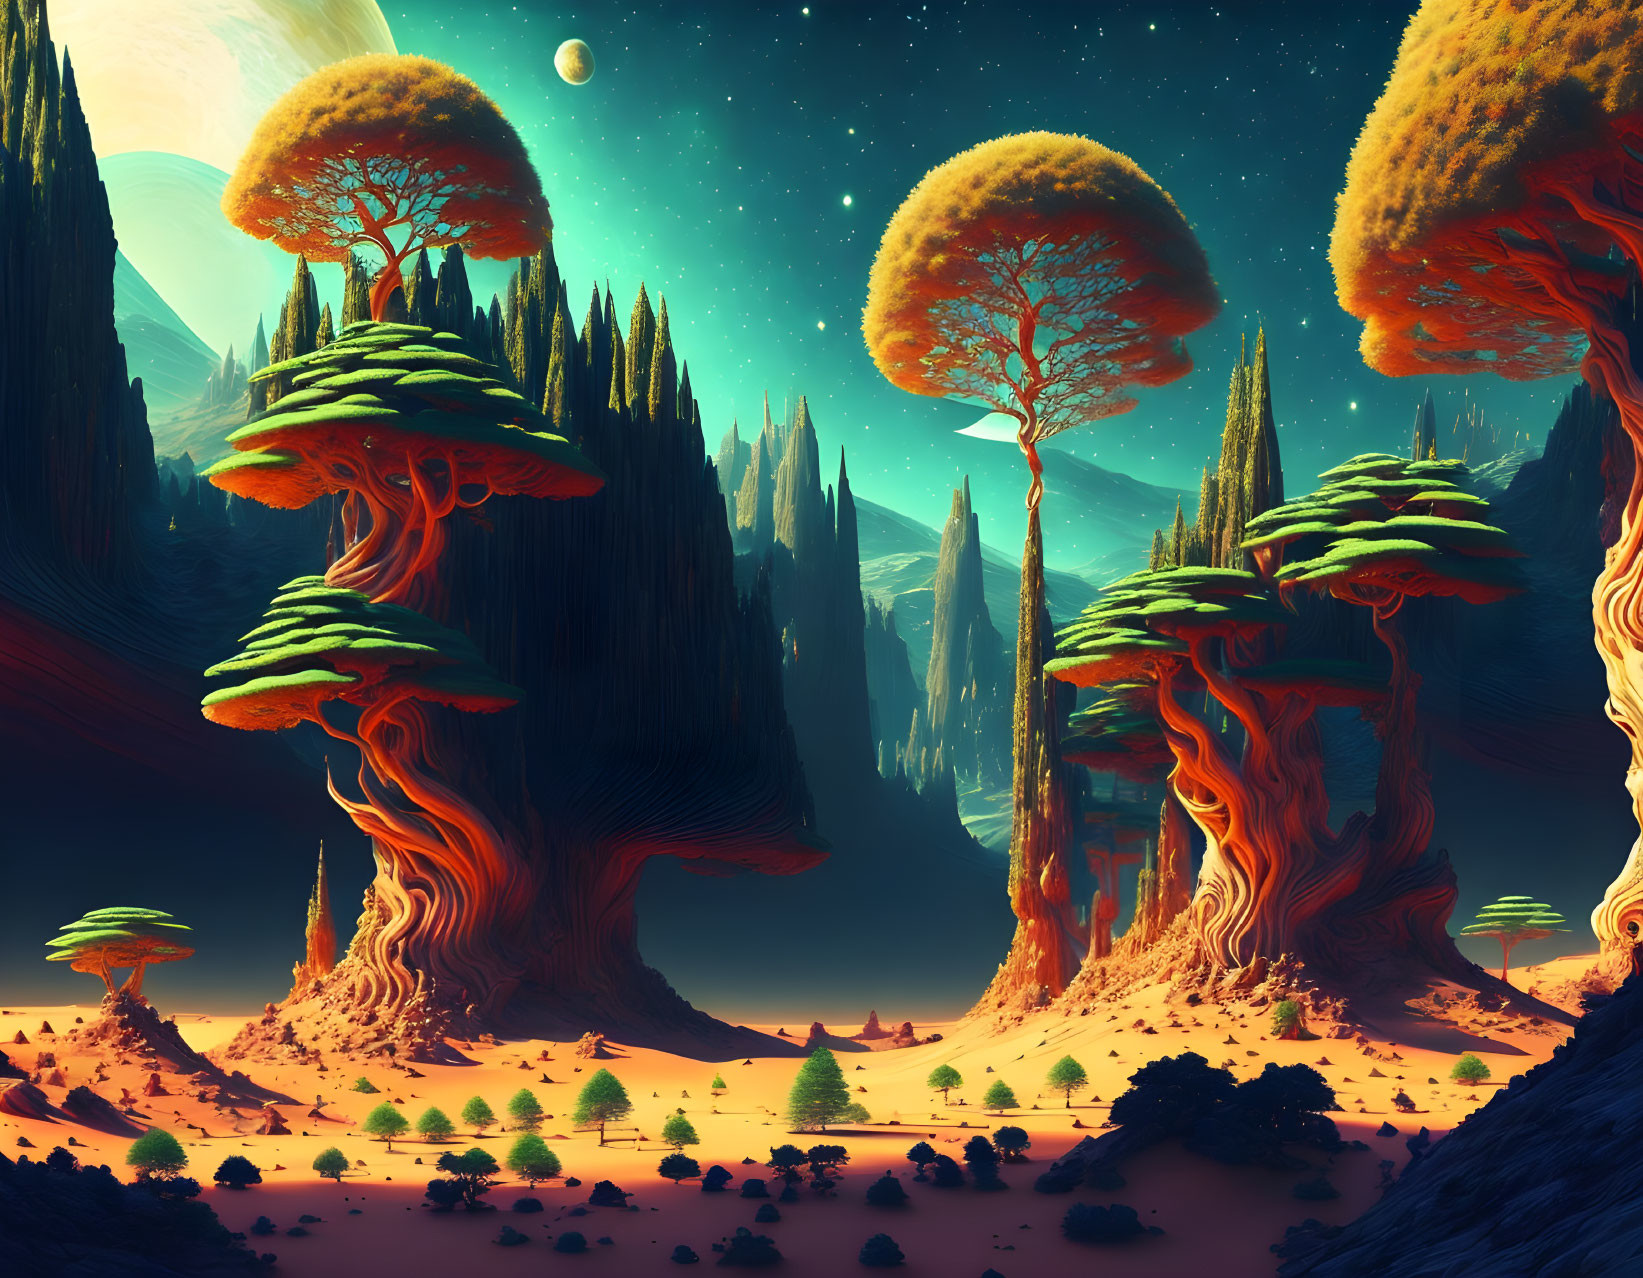 Fantasy landscape with towering mushroom trees, multiple moons, vibrant sky, and orange terrain